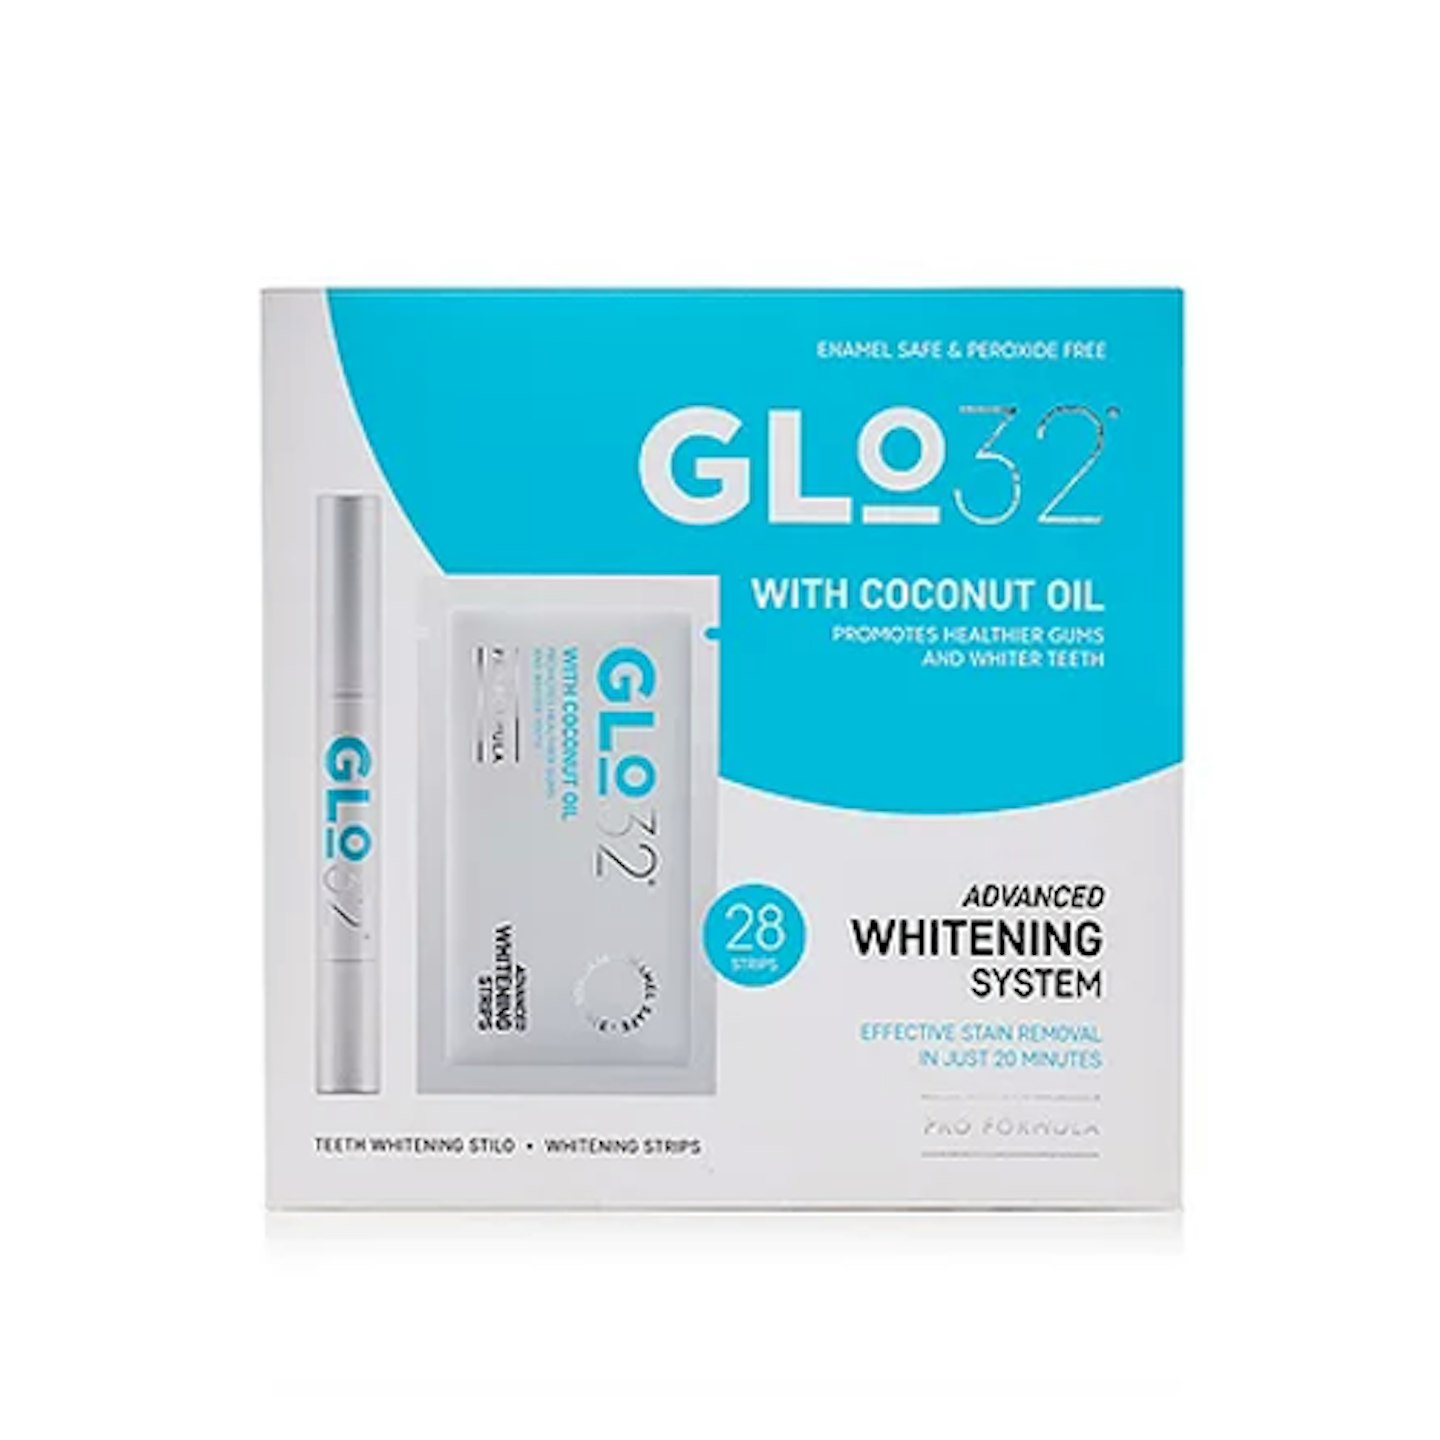 Glo32 Teeth Whitening System